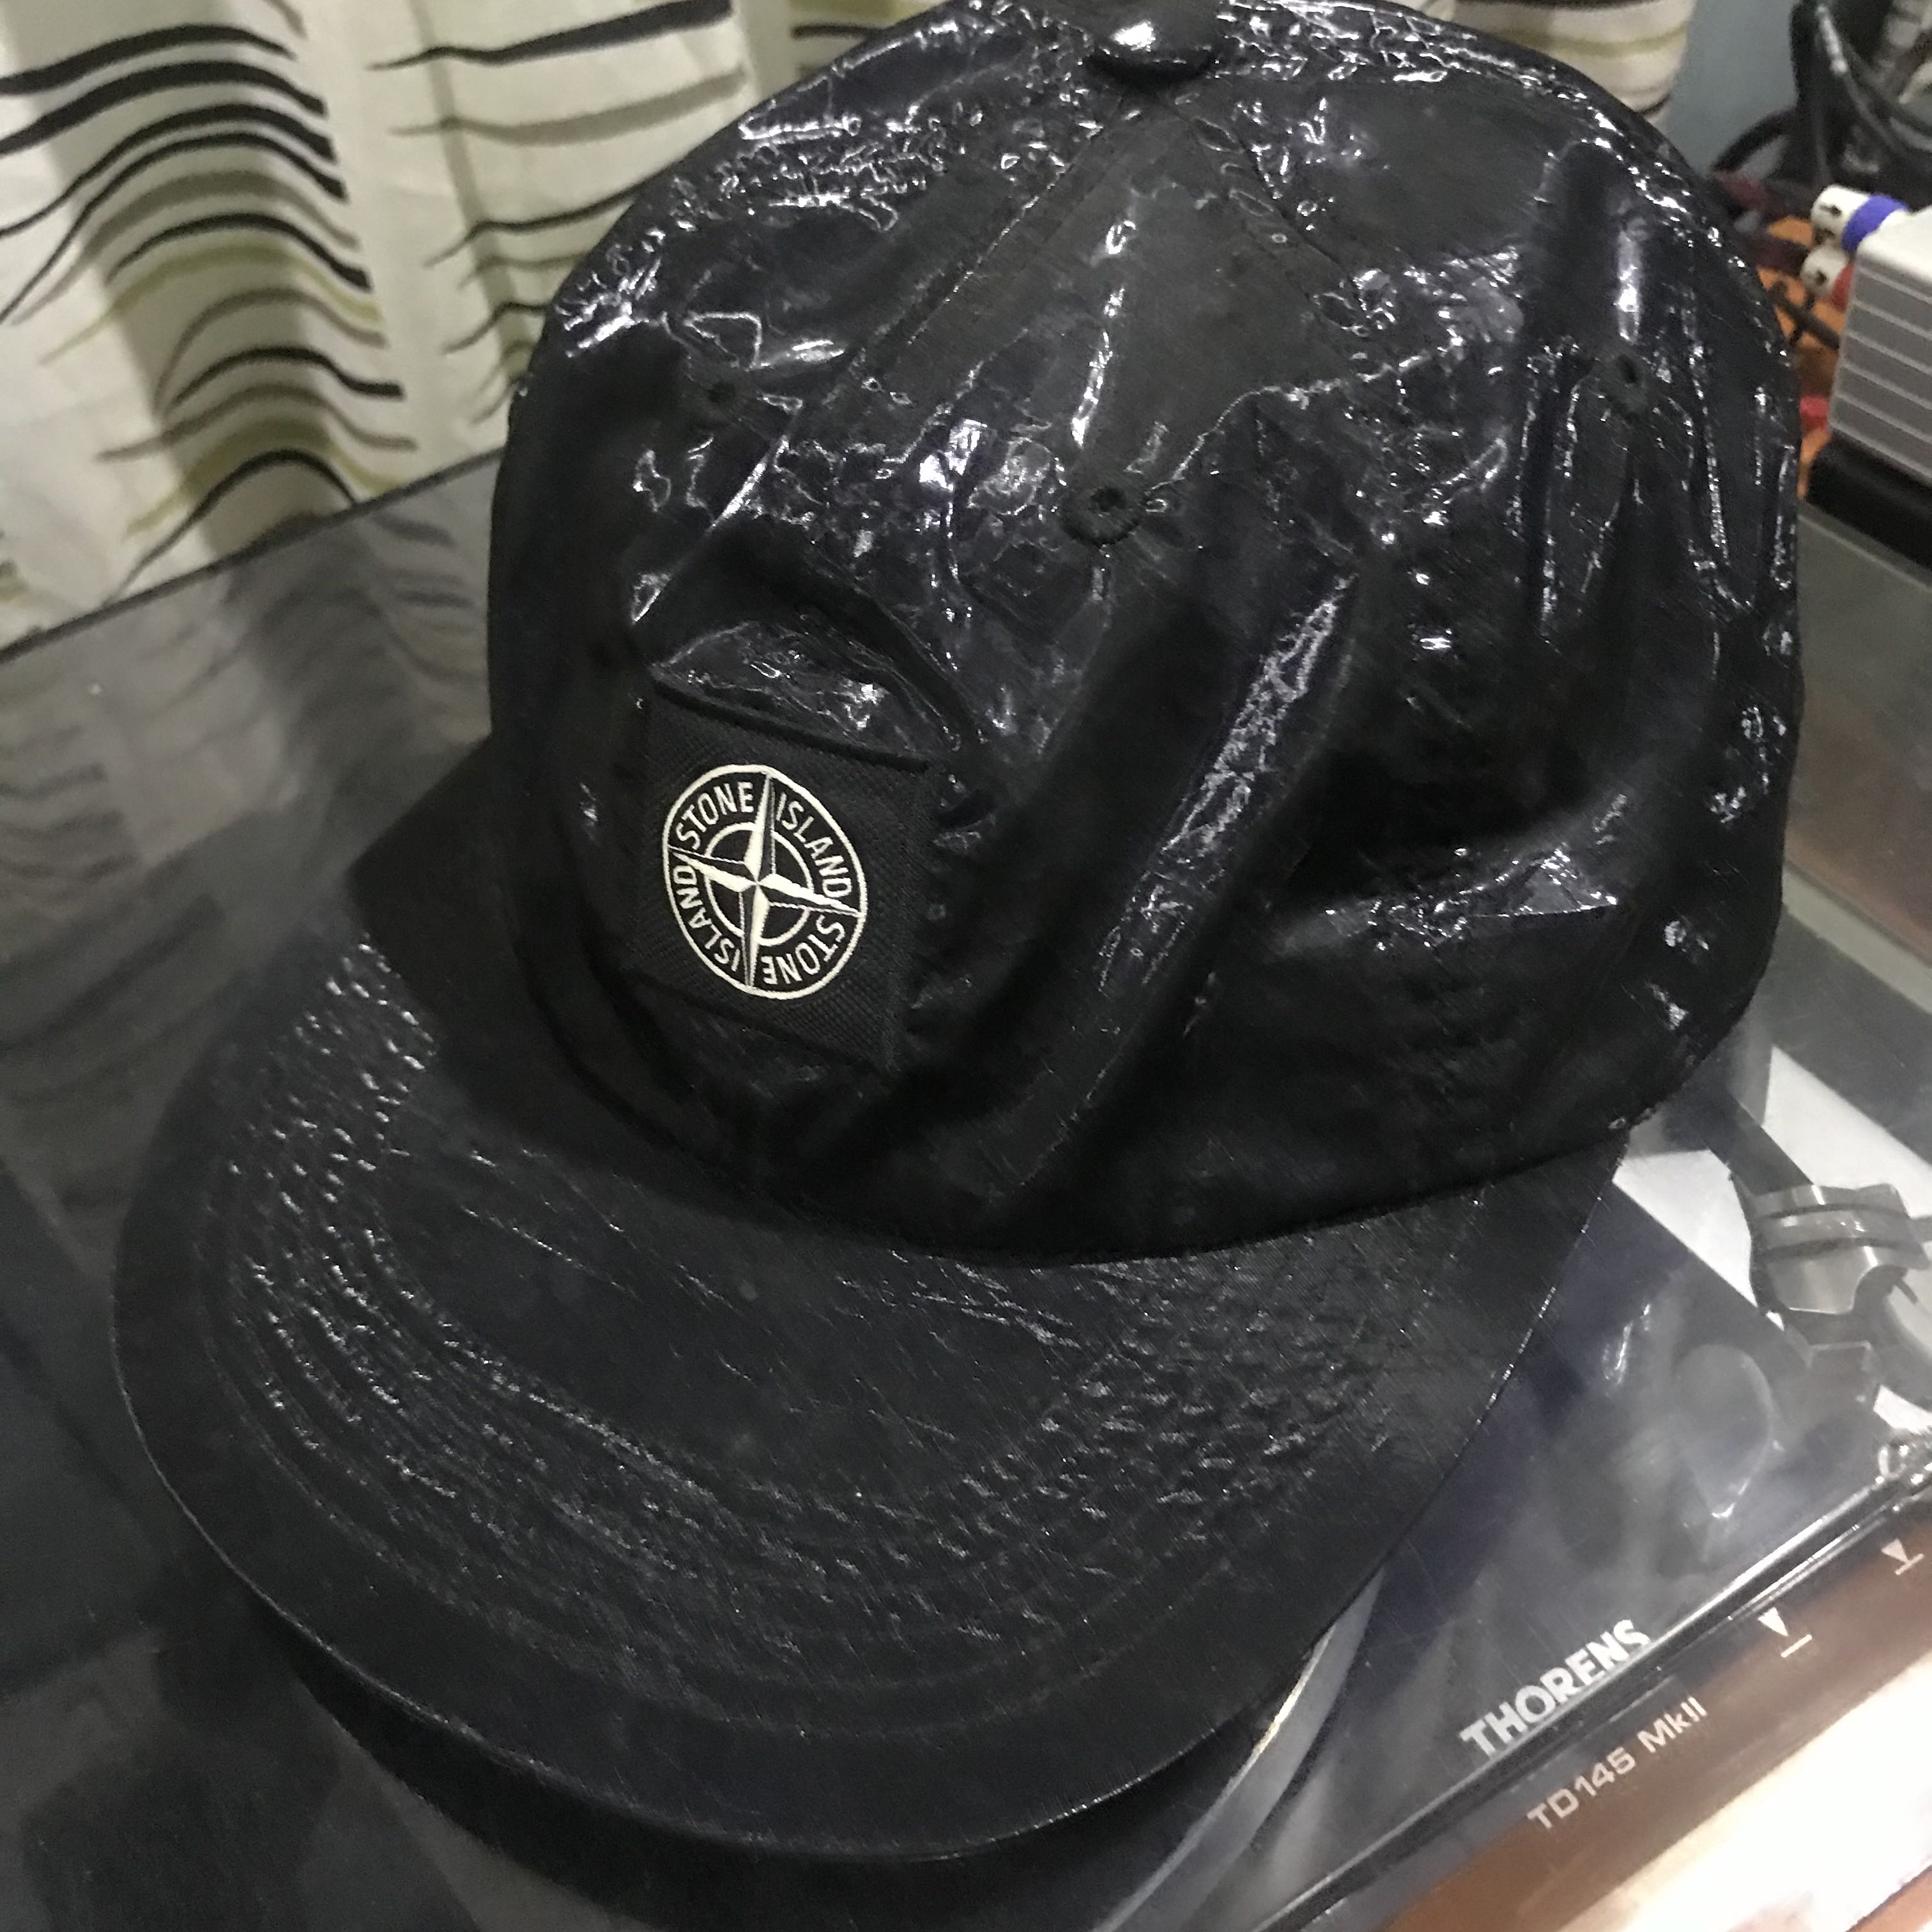 Stone island X Supreme cap in satin Black, Men's Fashion, Watches